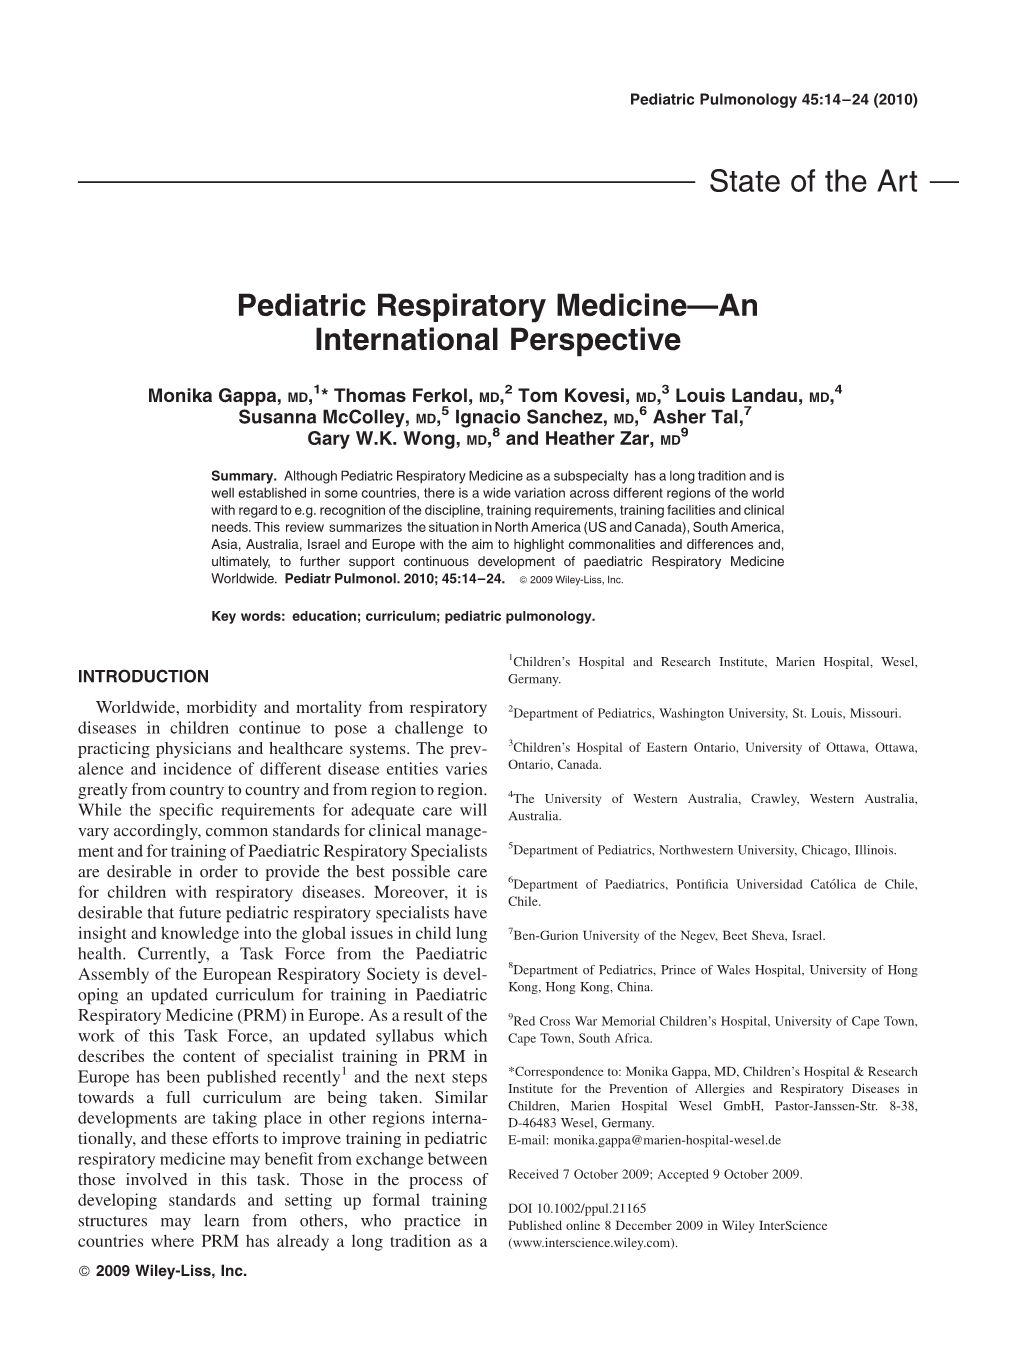 Pediatric Respiratory Medicine-An International Perspective